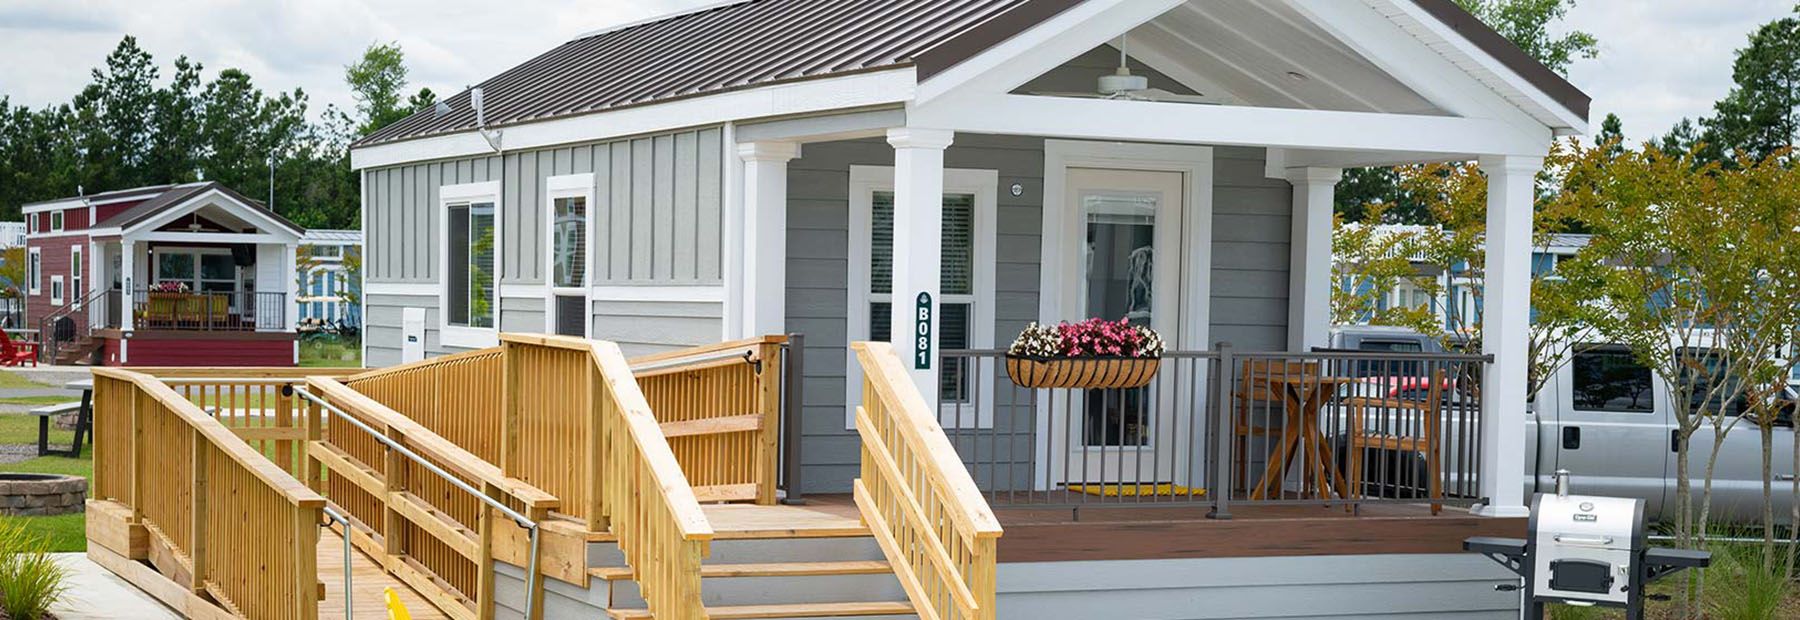 Carolina Pines RV Resort Homes for Sale